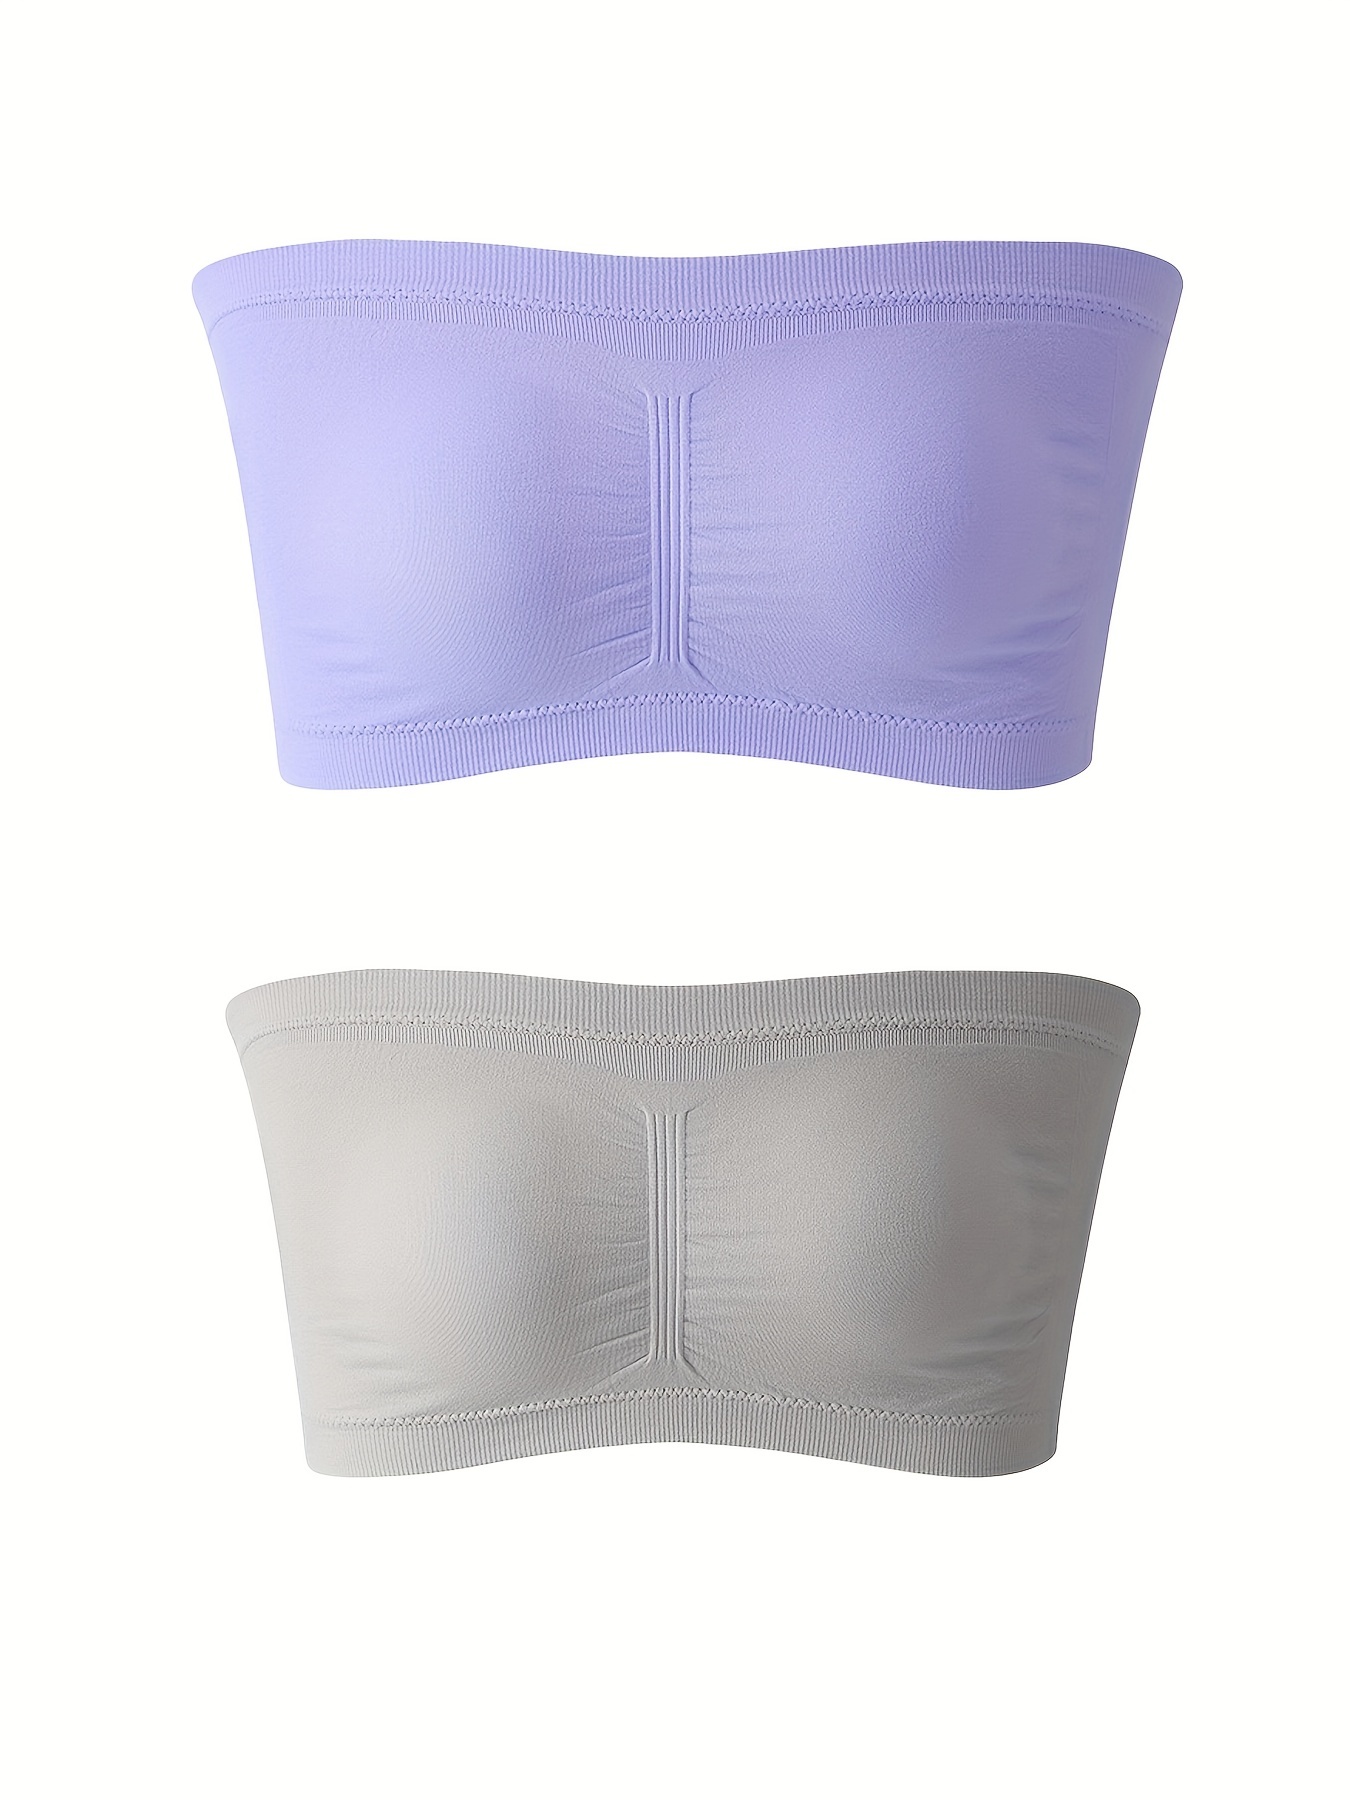 Seamless Bandeau Bra Top, Strapless Non Padded Nylon Stretch Bra, Women's  Underwear & Lingerie